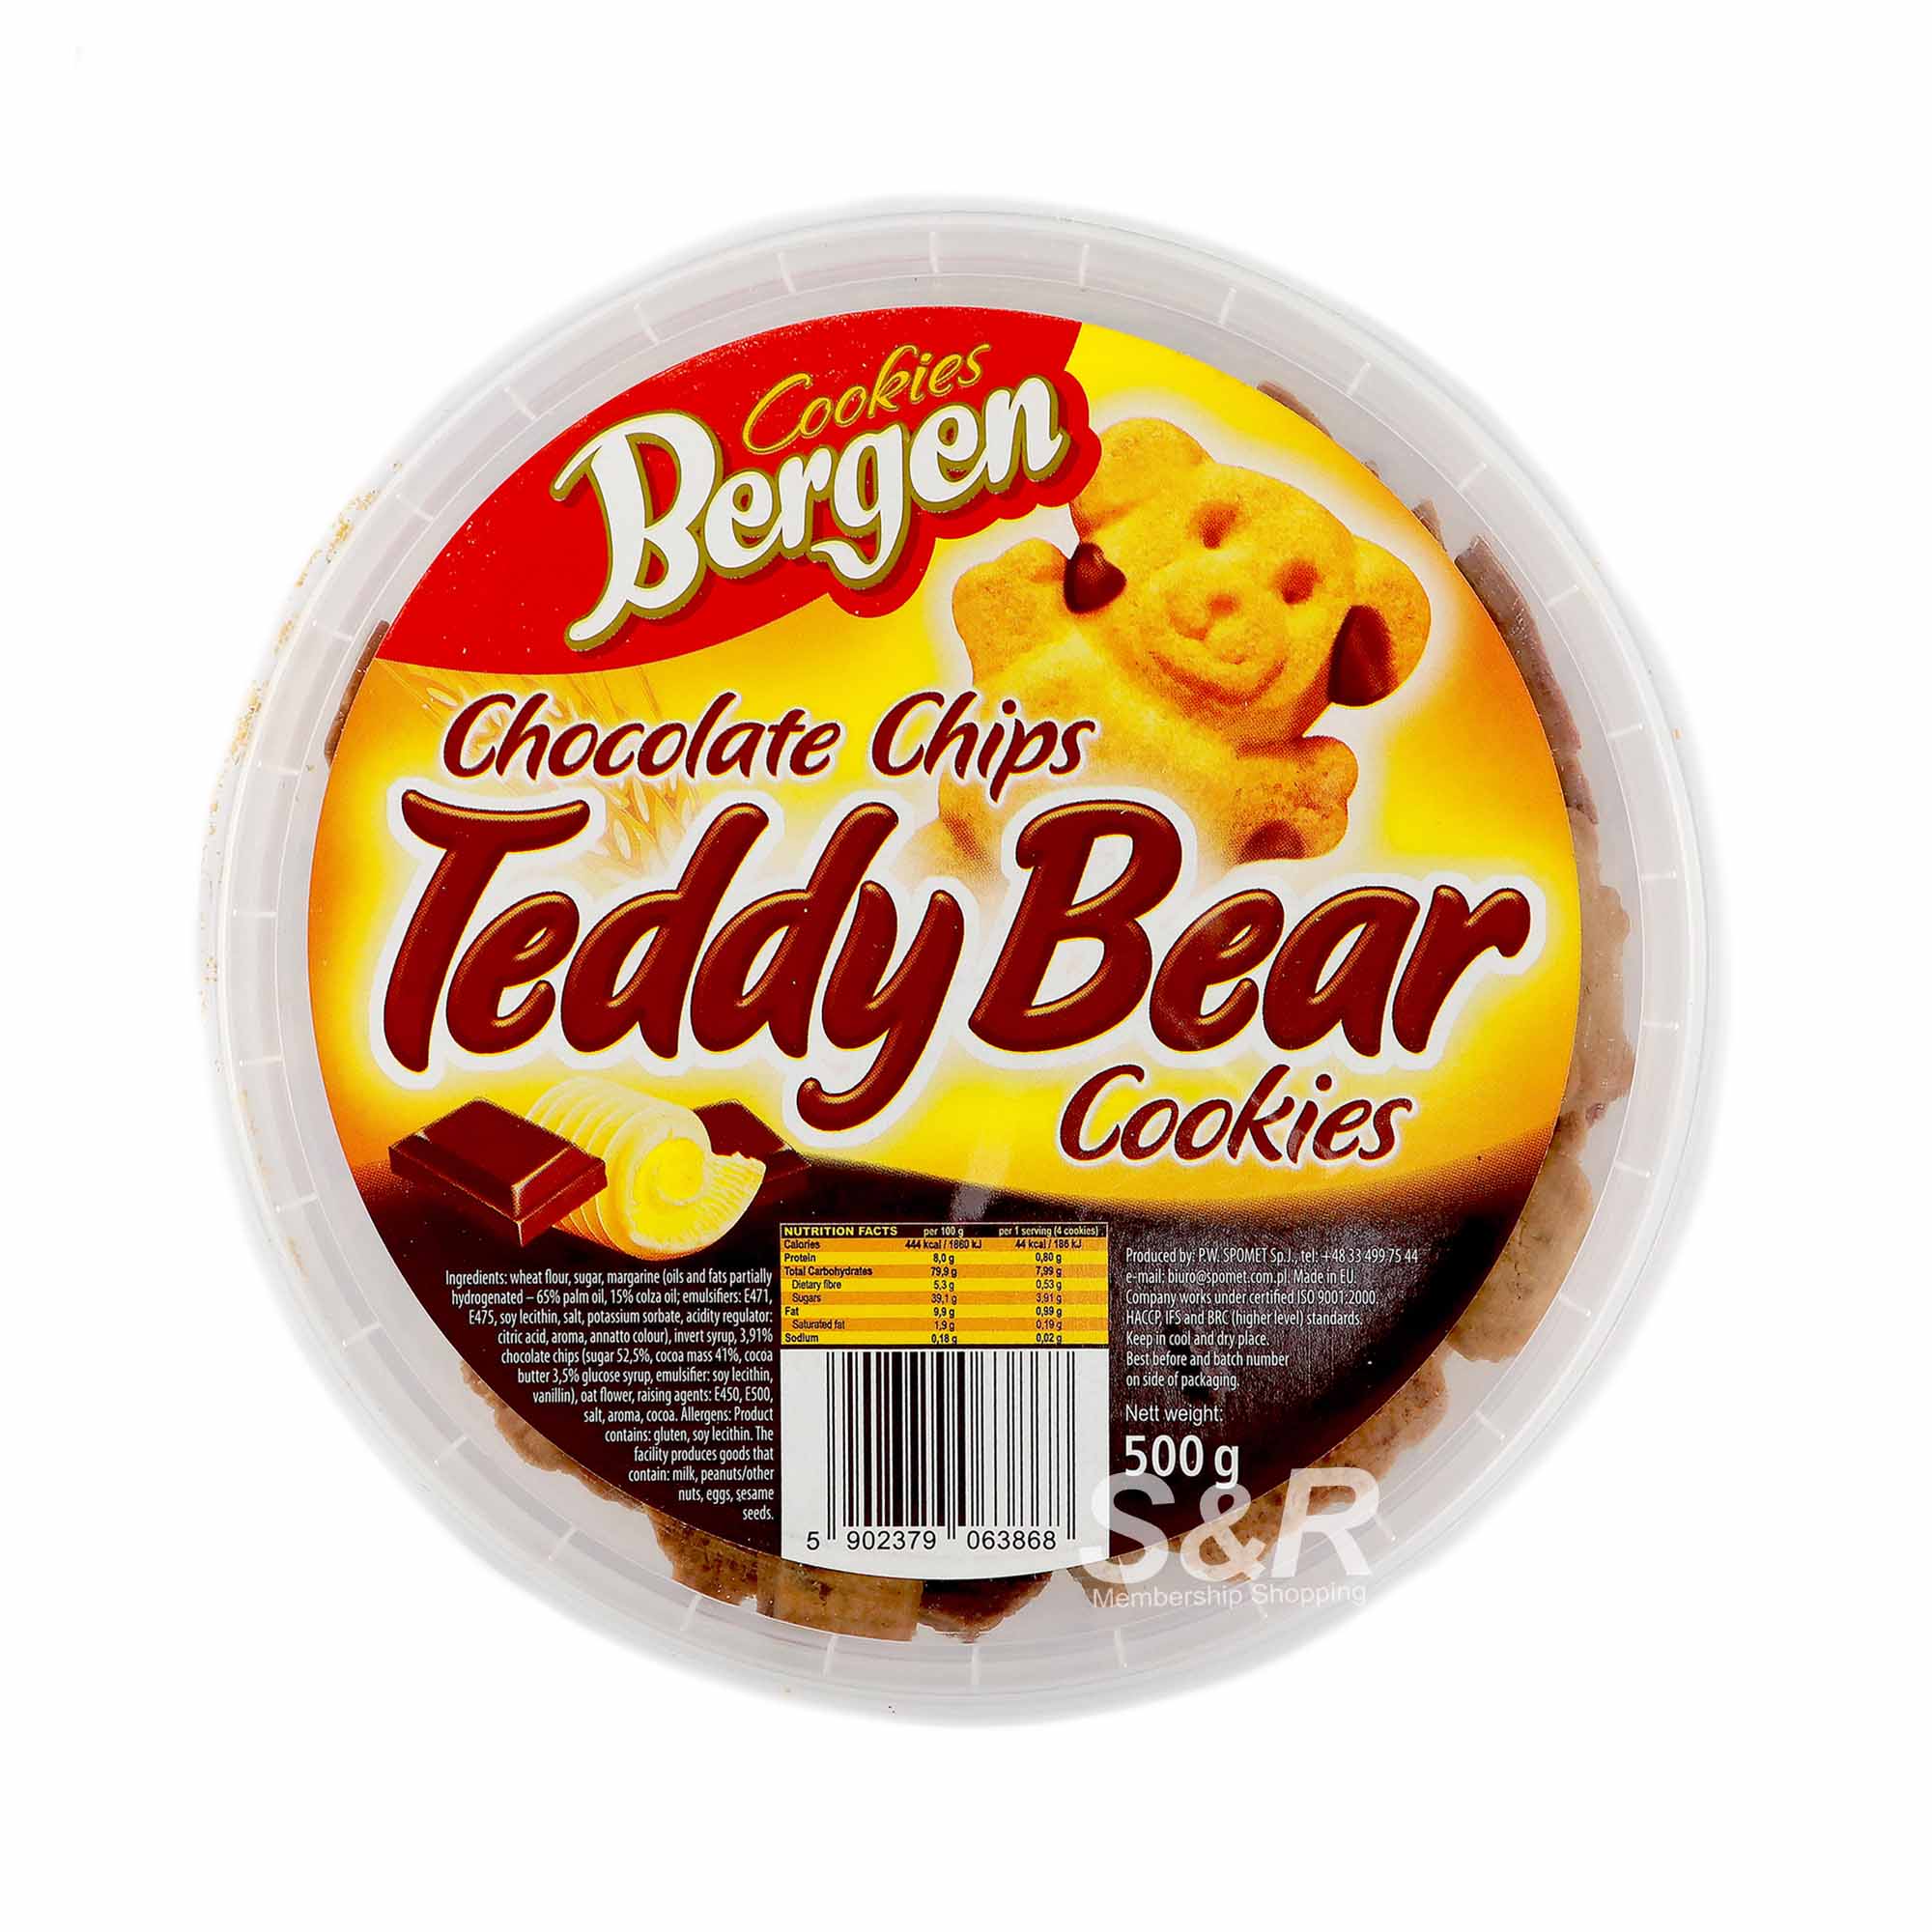 Bergen Chocolate Chips Teddy Bear Cookies 500g